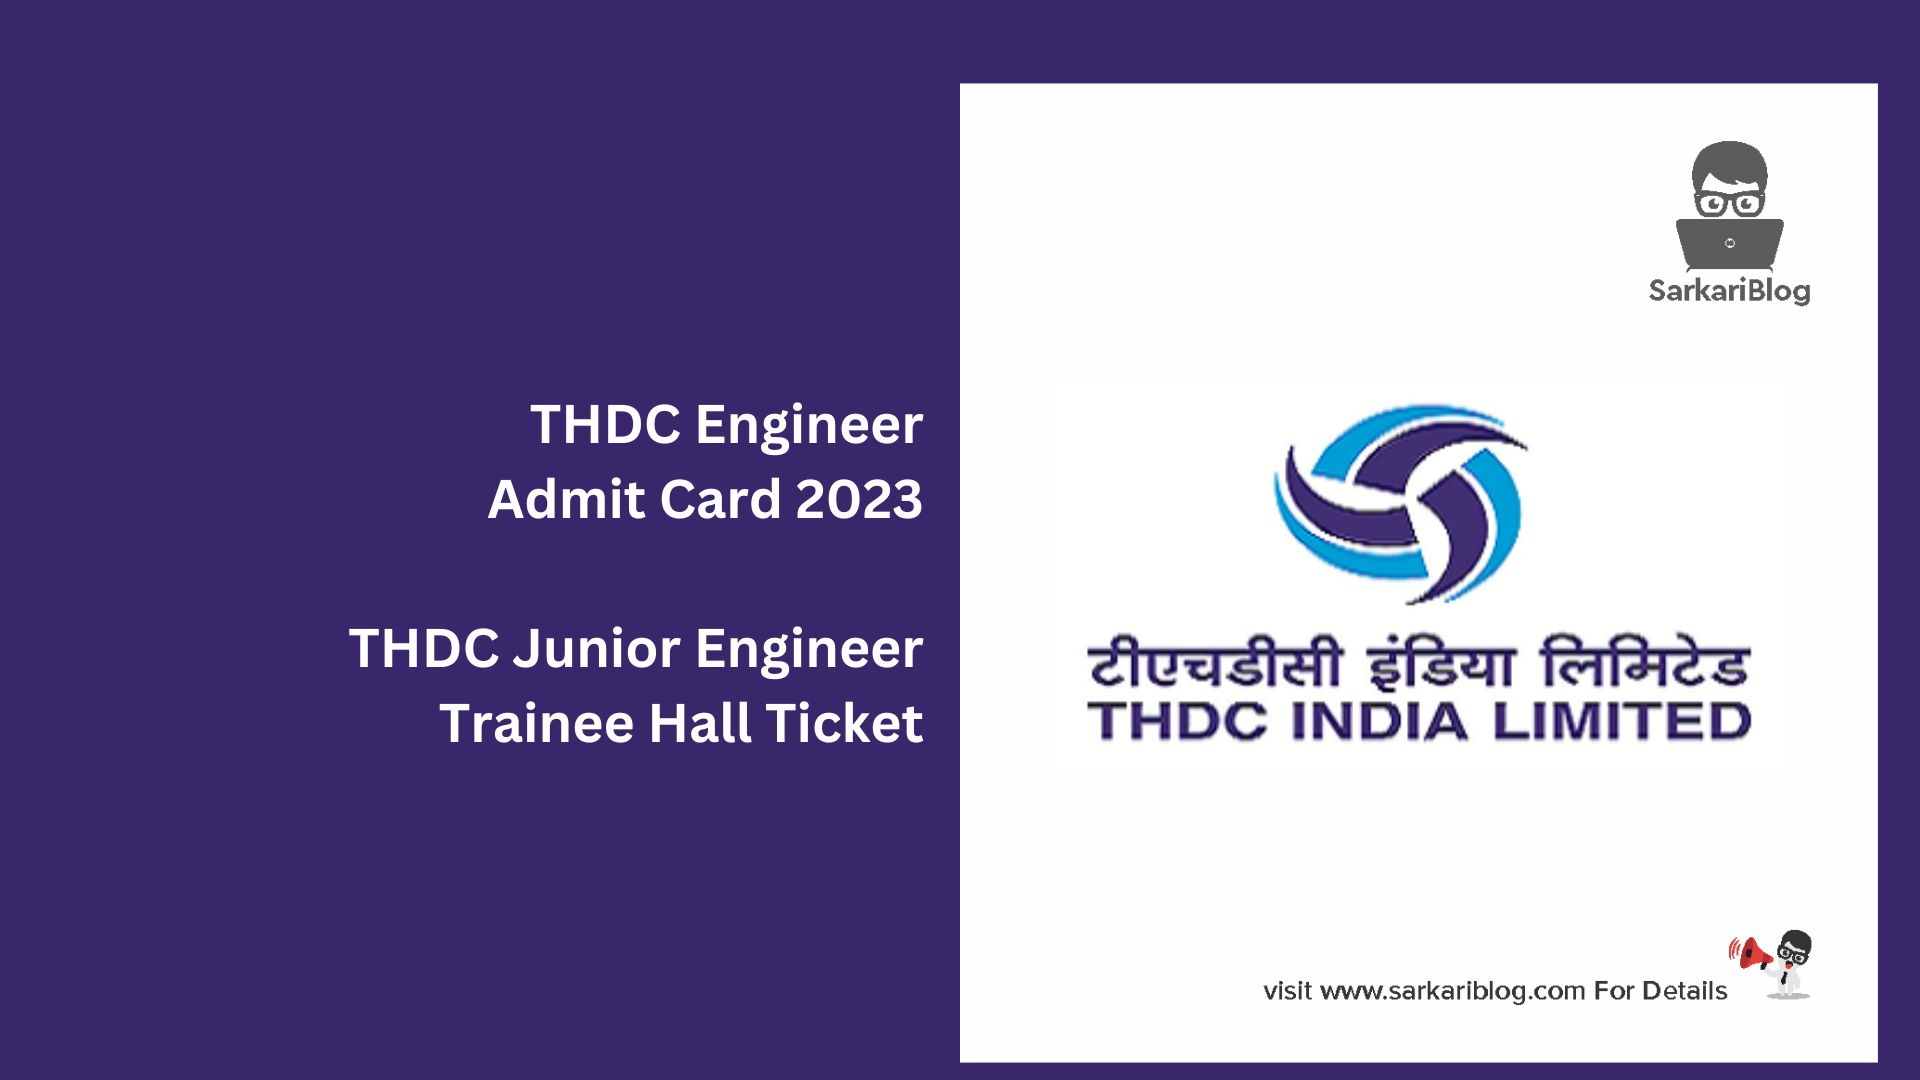 THDC Engineer Admit Card 2023